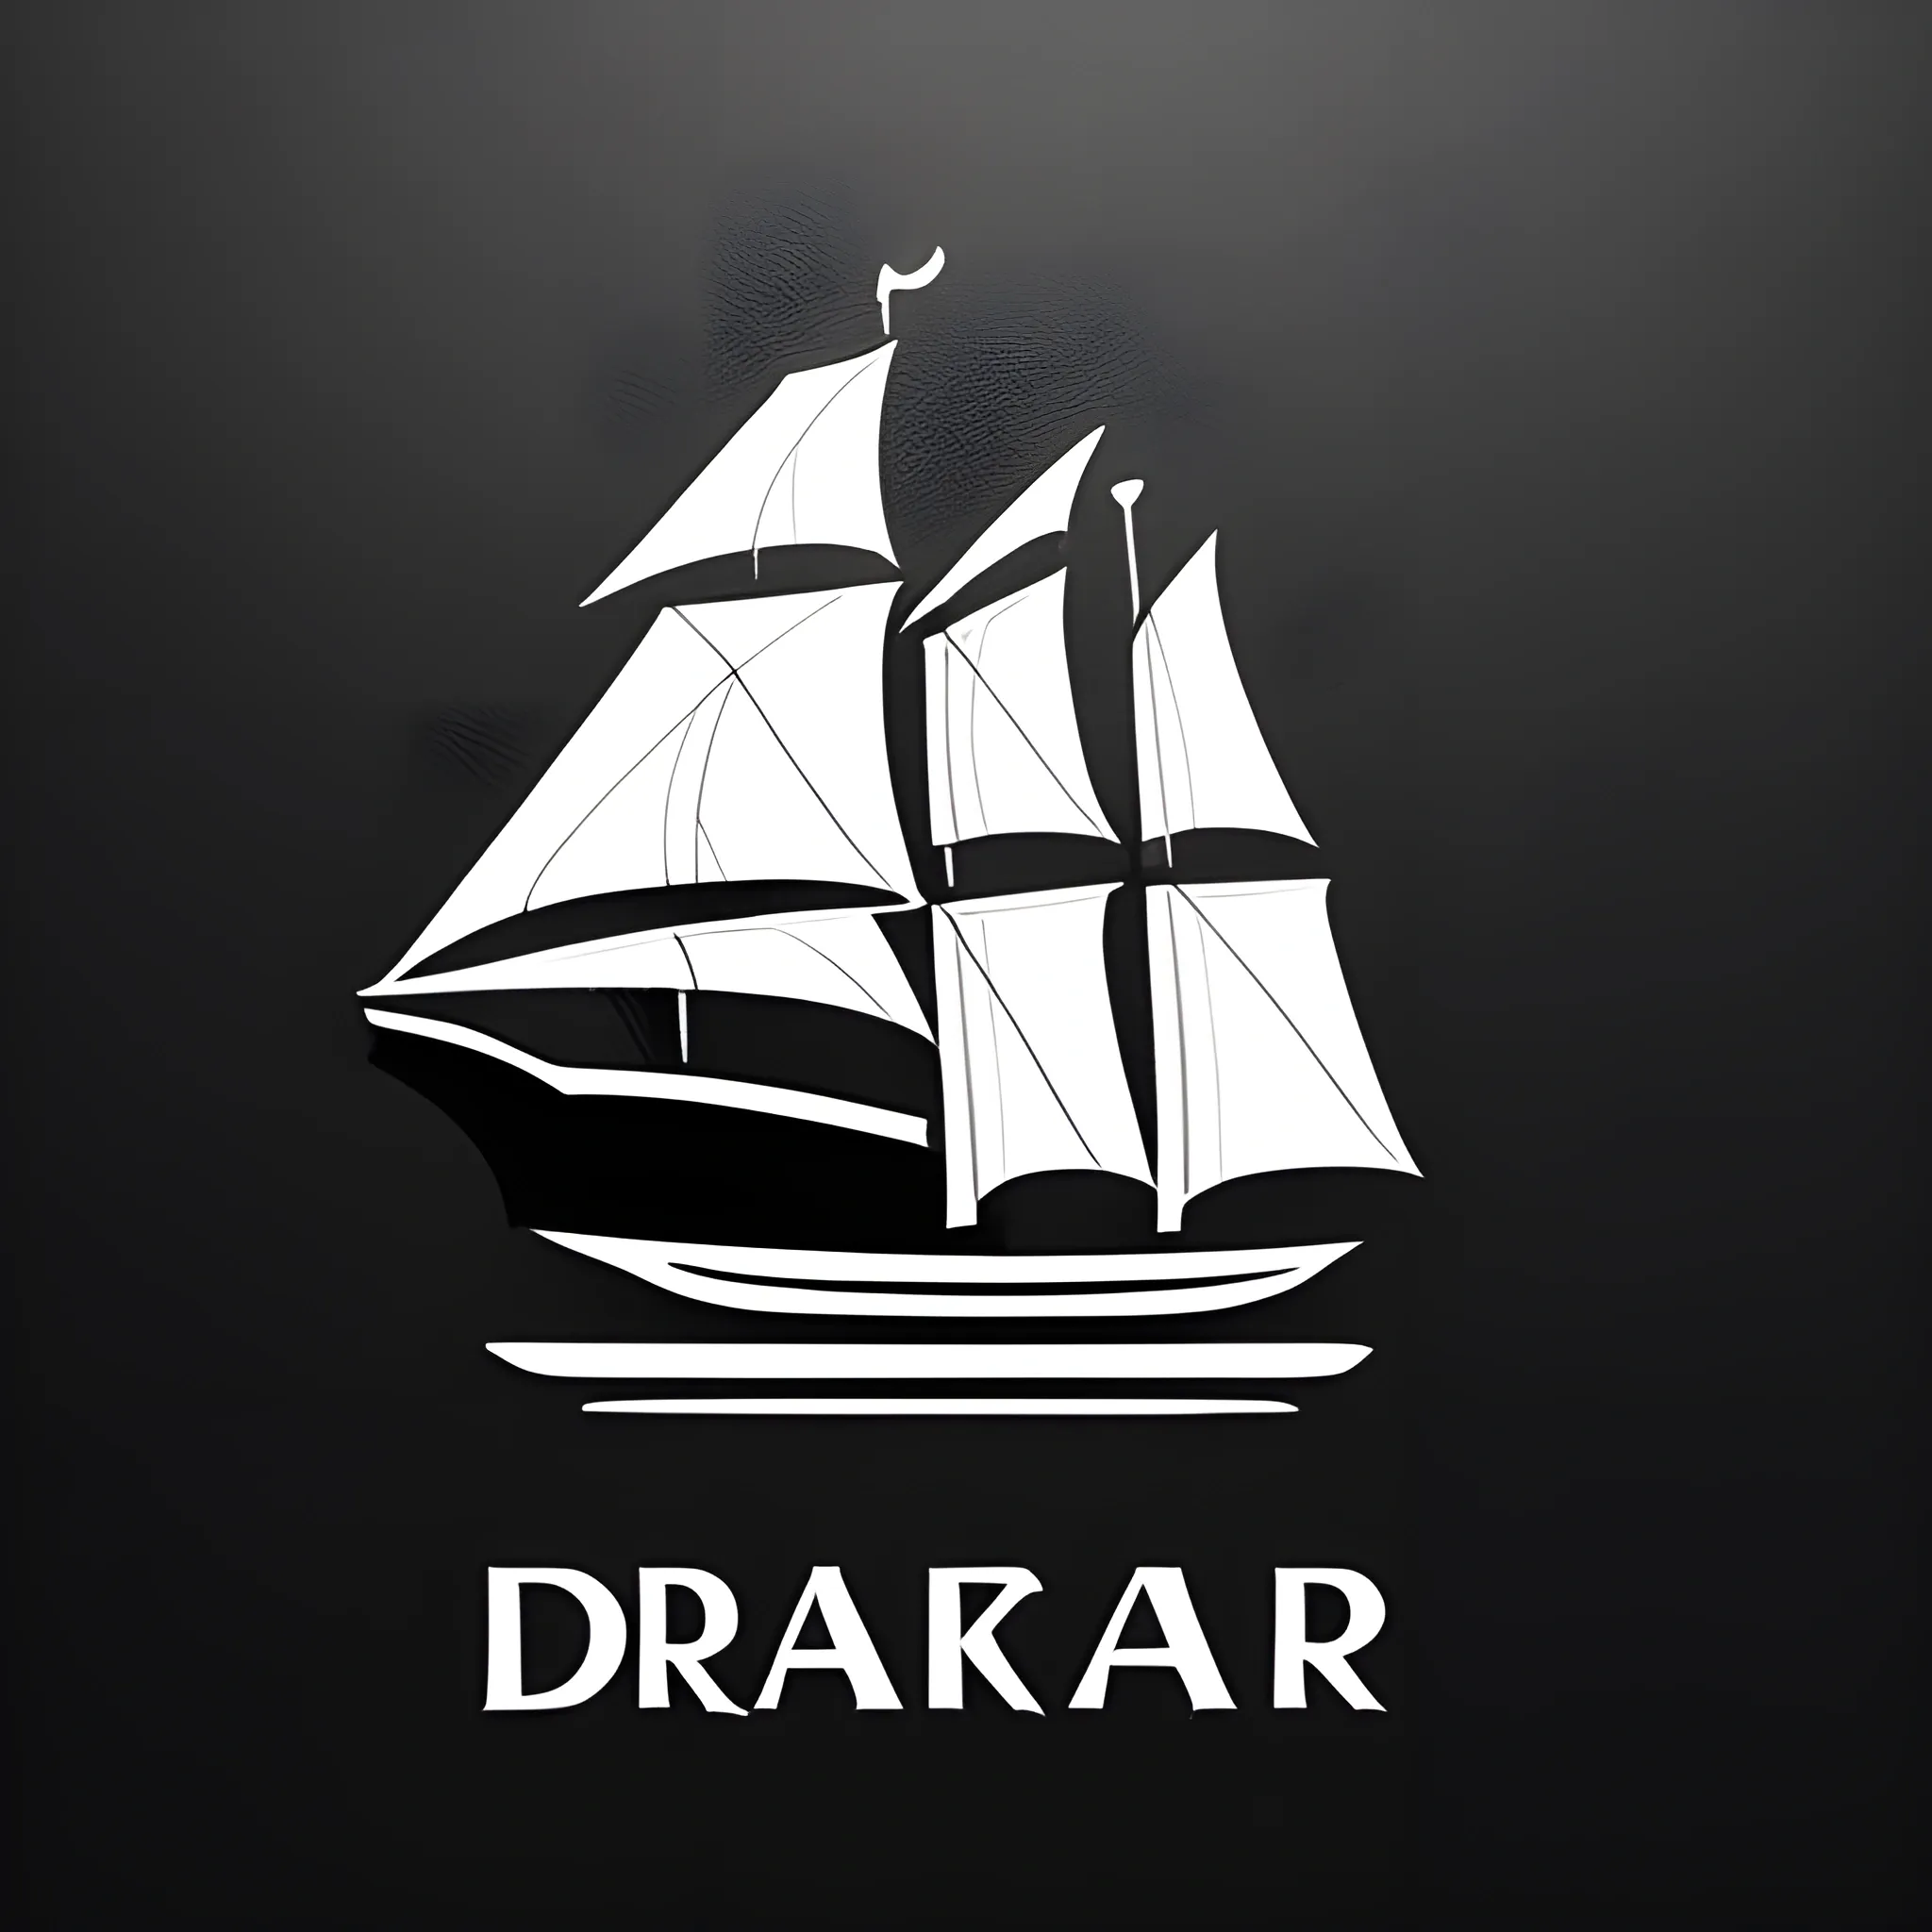 drakkar ship logo on the black background